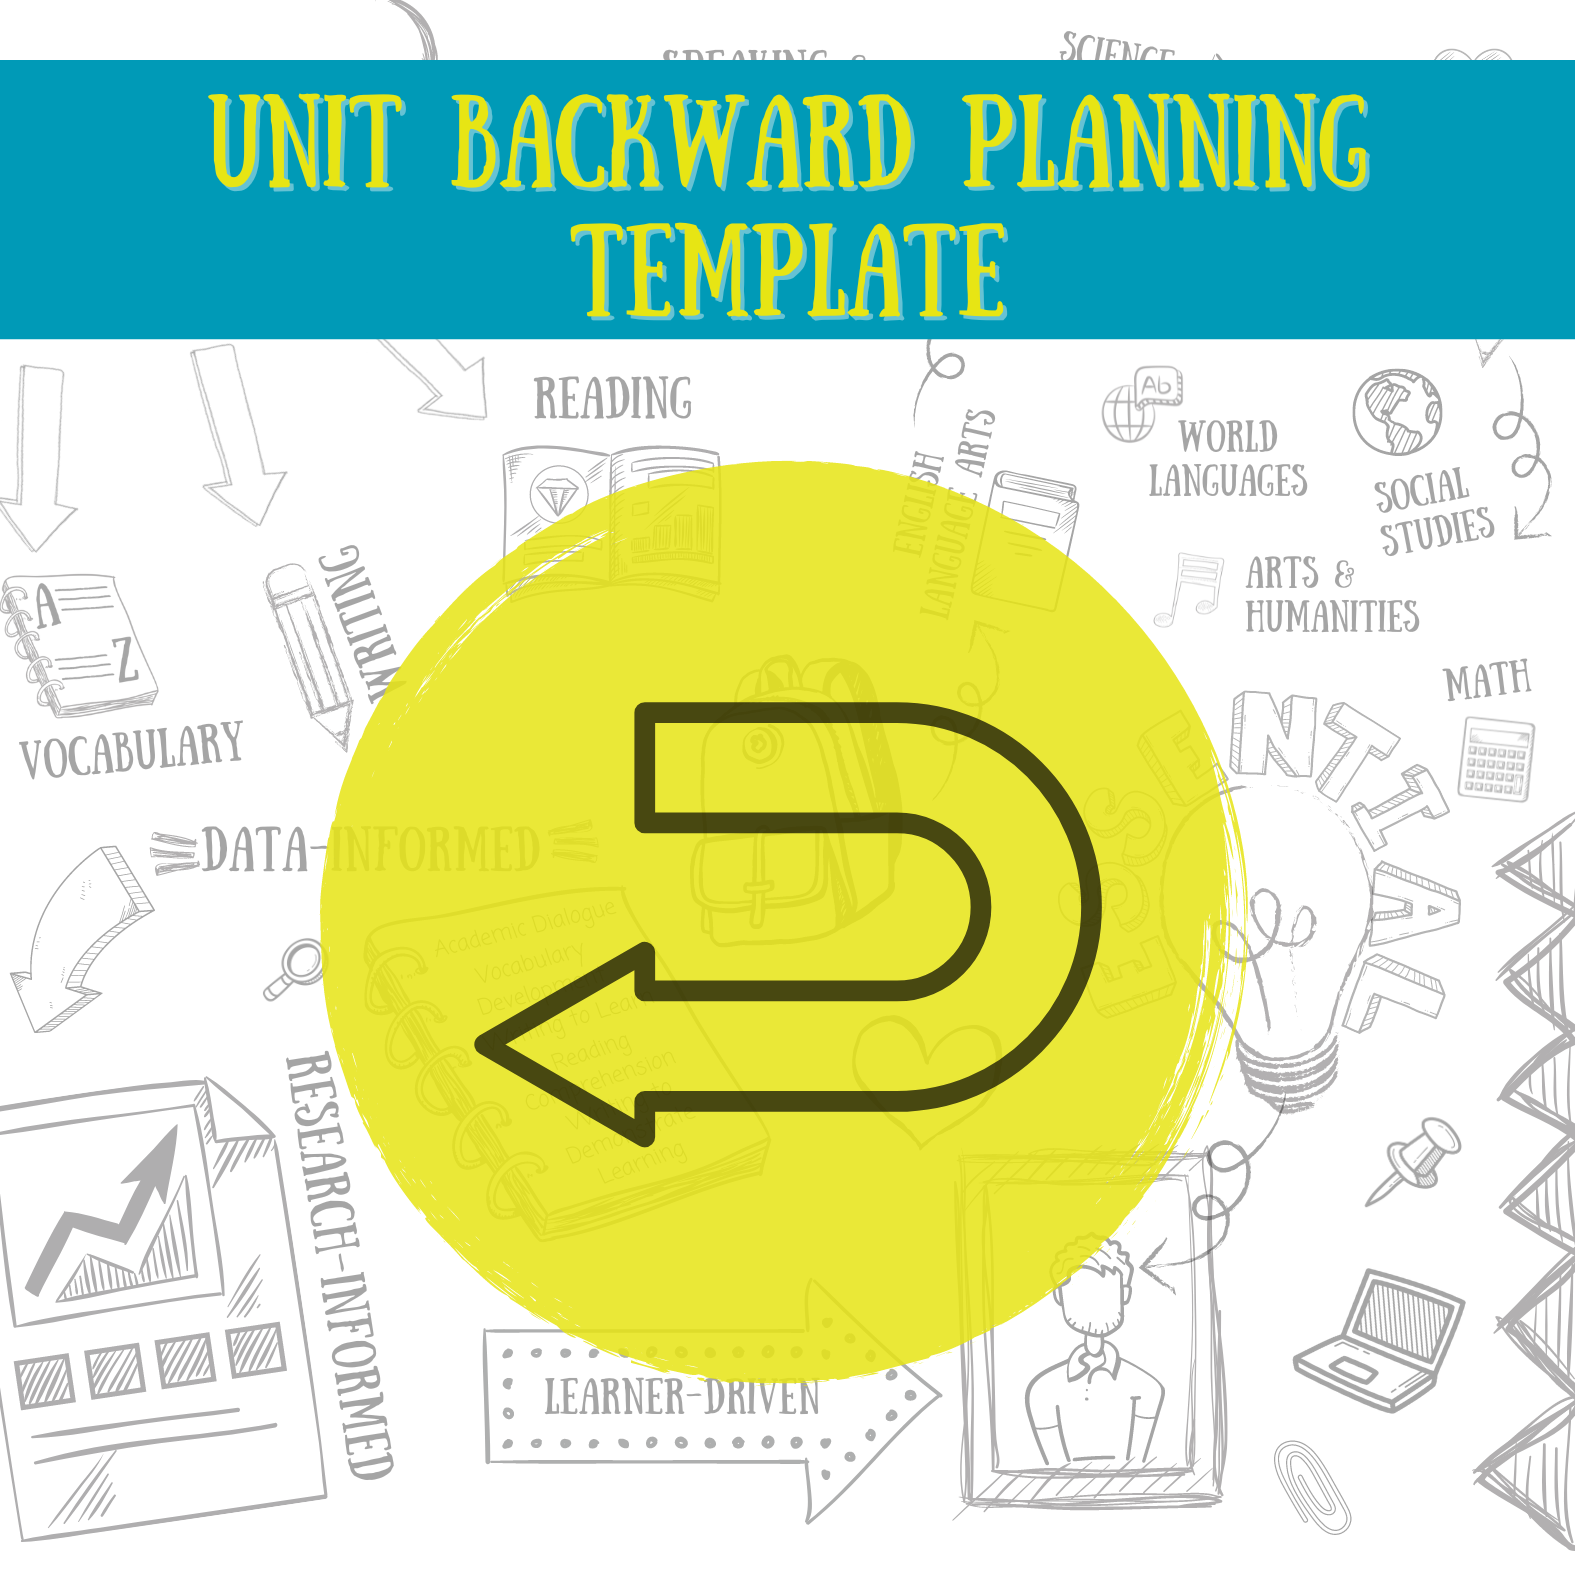 Adolescent Literacy Model- Unit Backward Planning Template